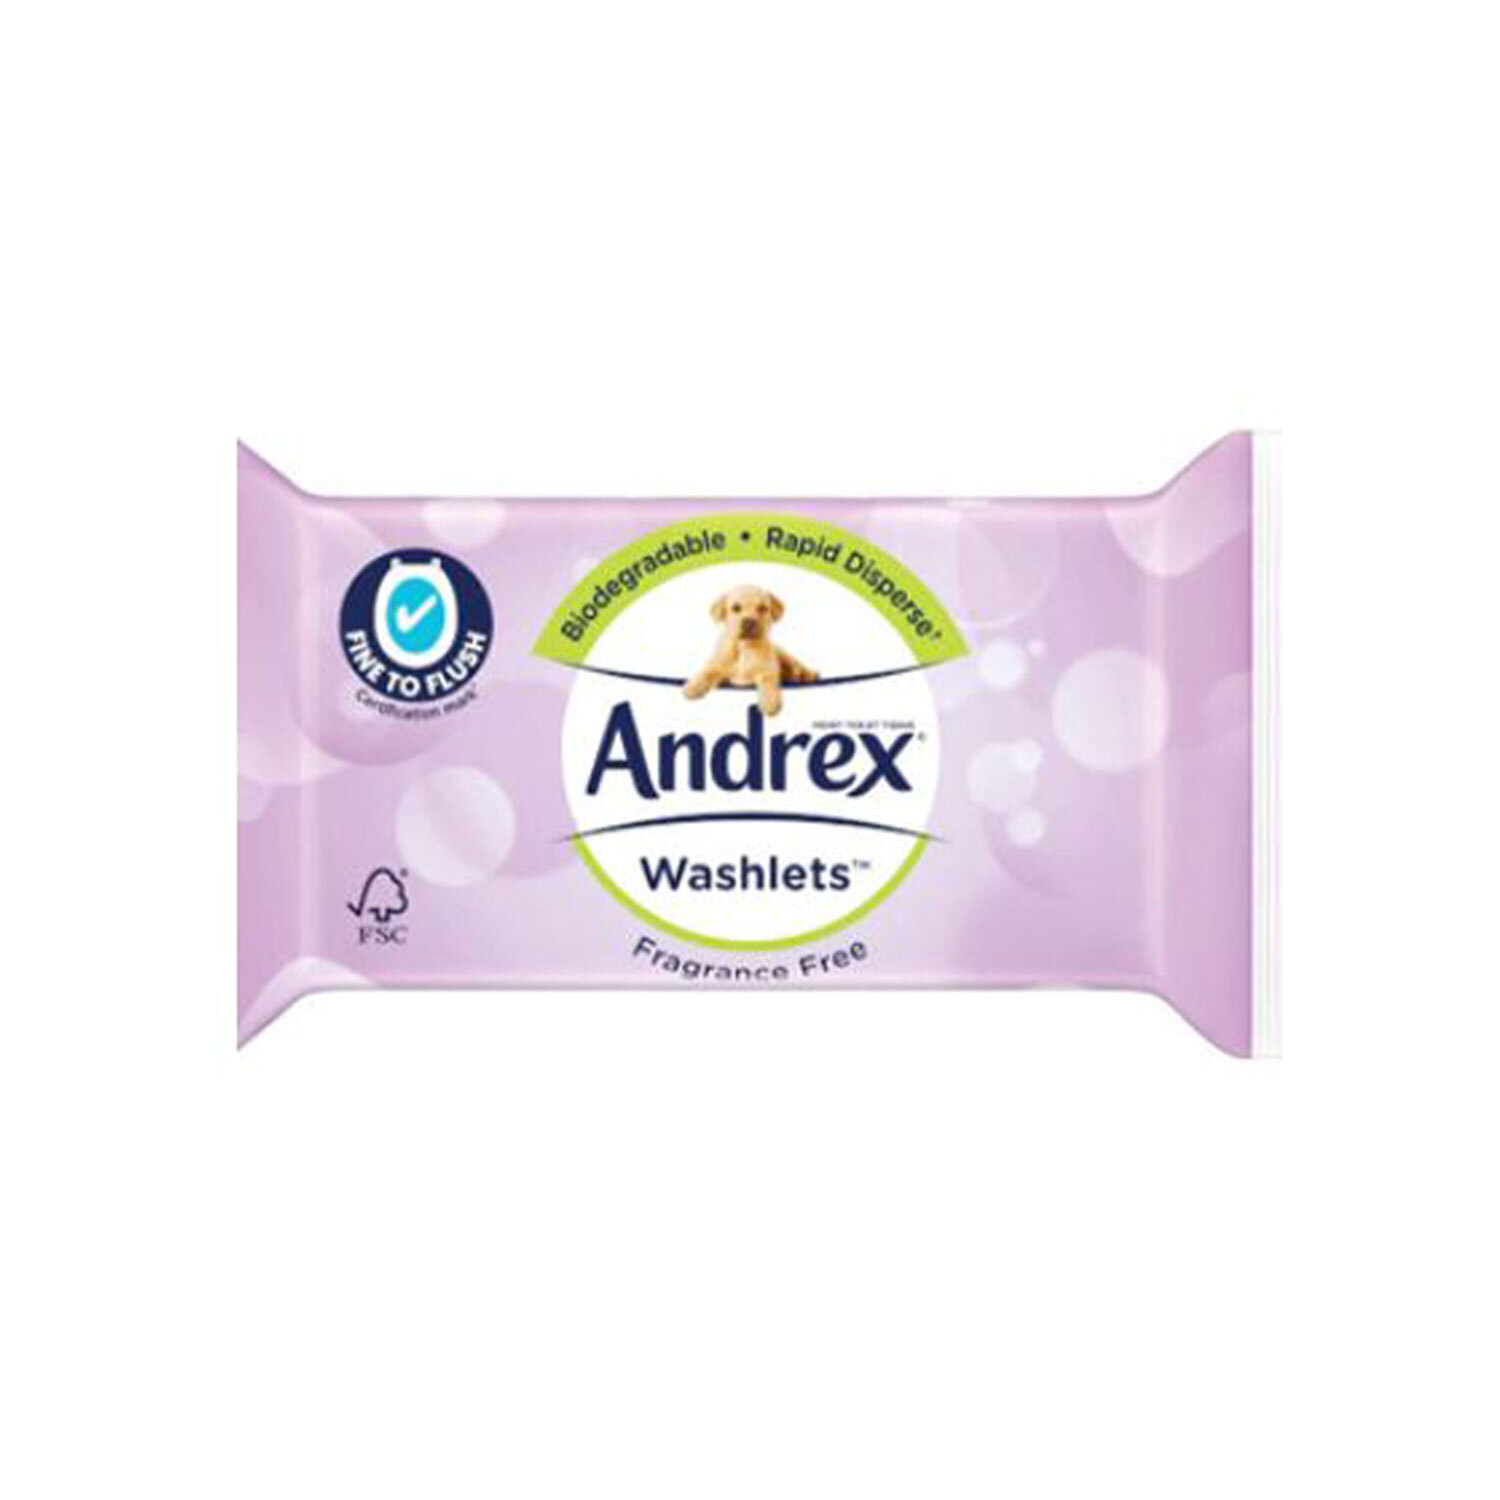 Andrex Fragrance Free Washlets 36 Pack Image